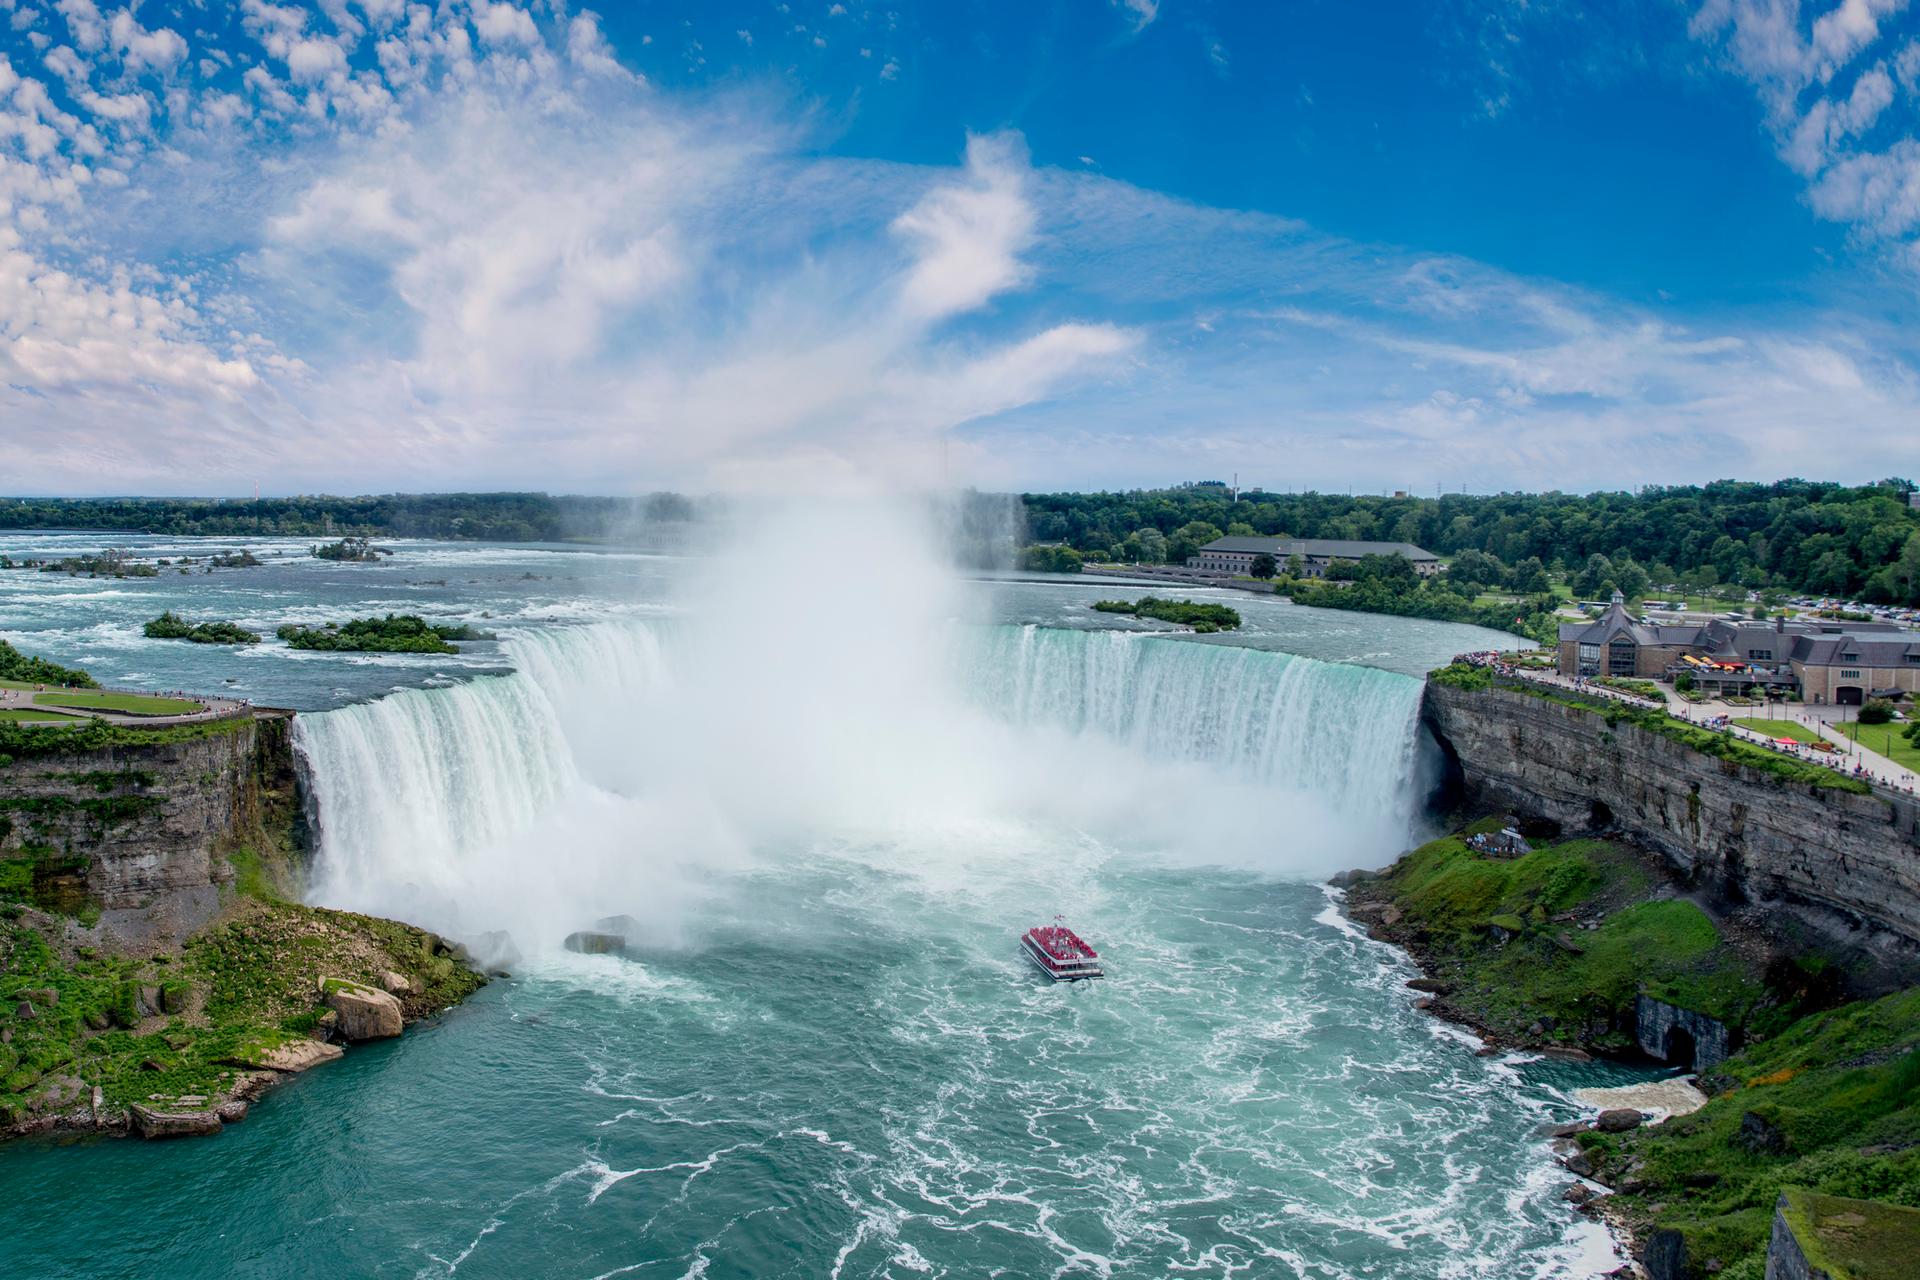 Niagara Falls Hornblower cruise